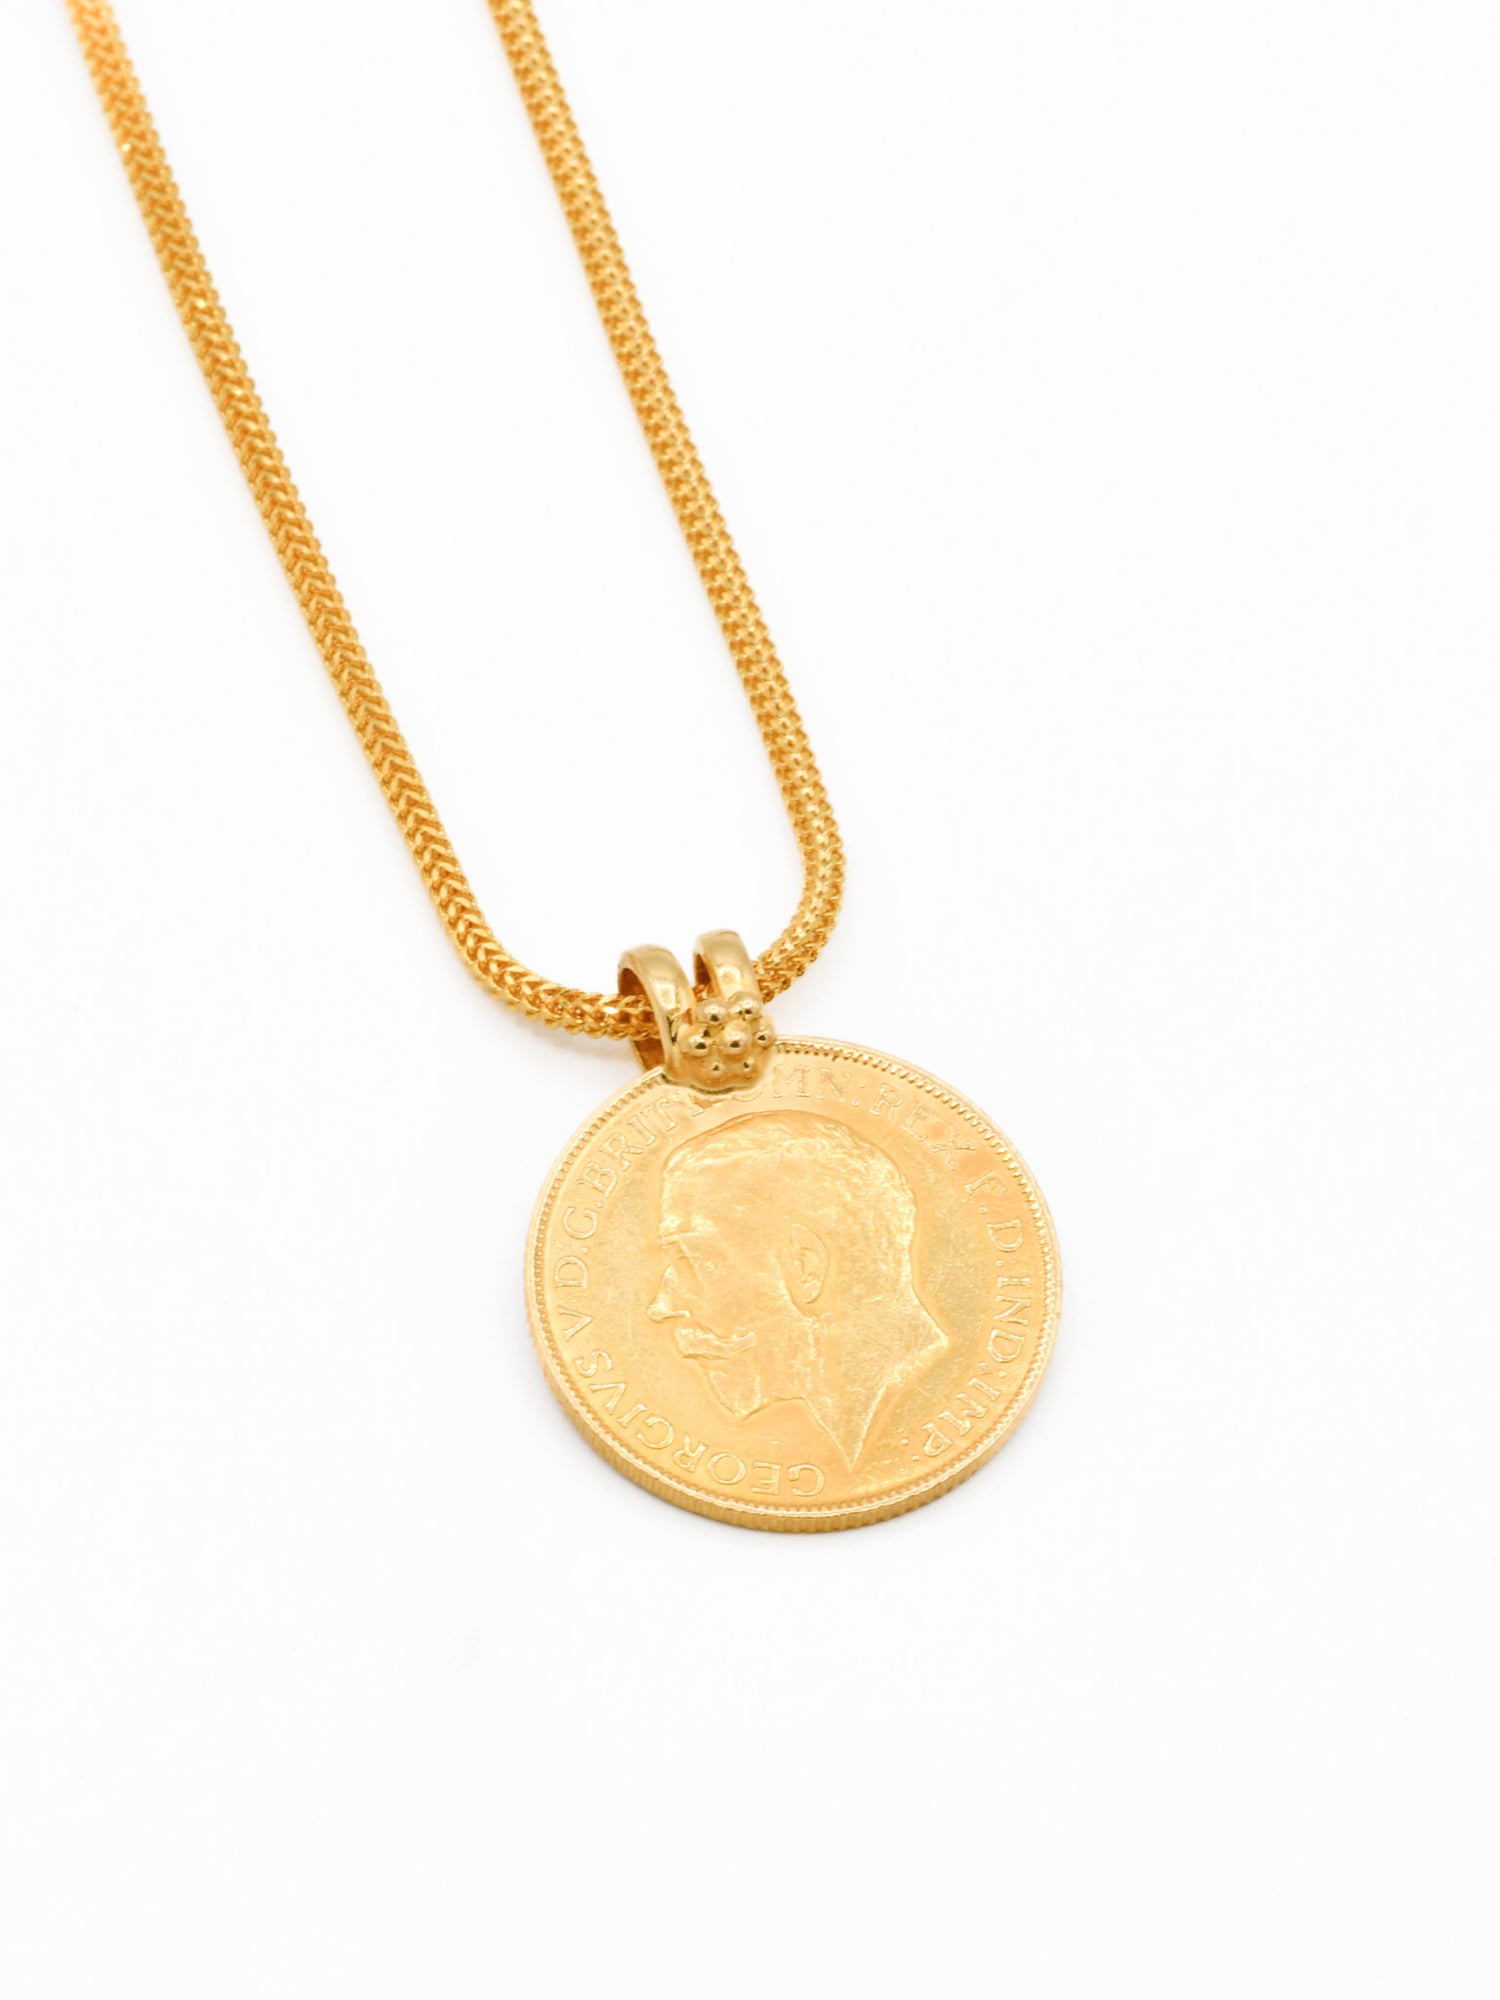 22ct Gold Full Sovereign pendant - Roop Darshan